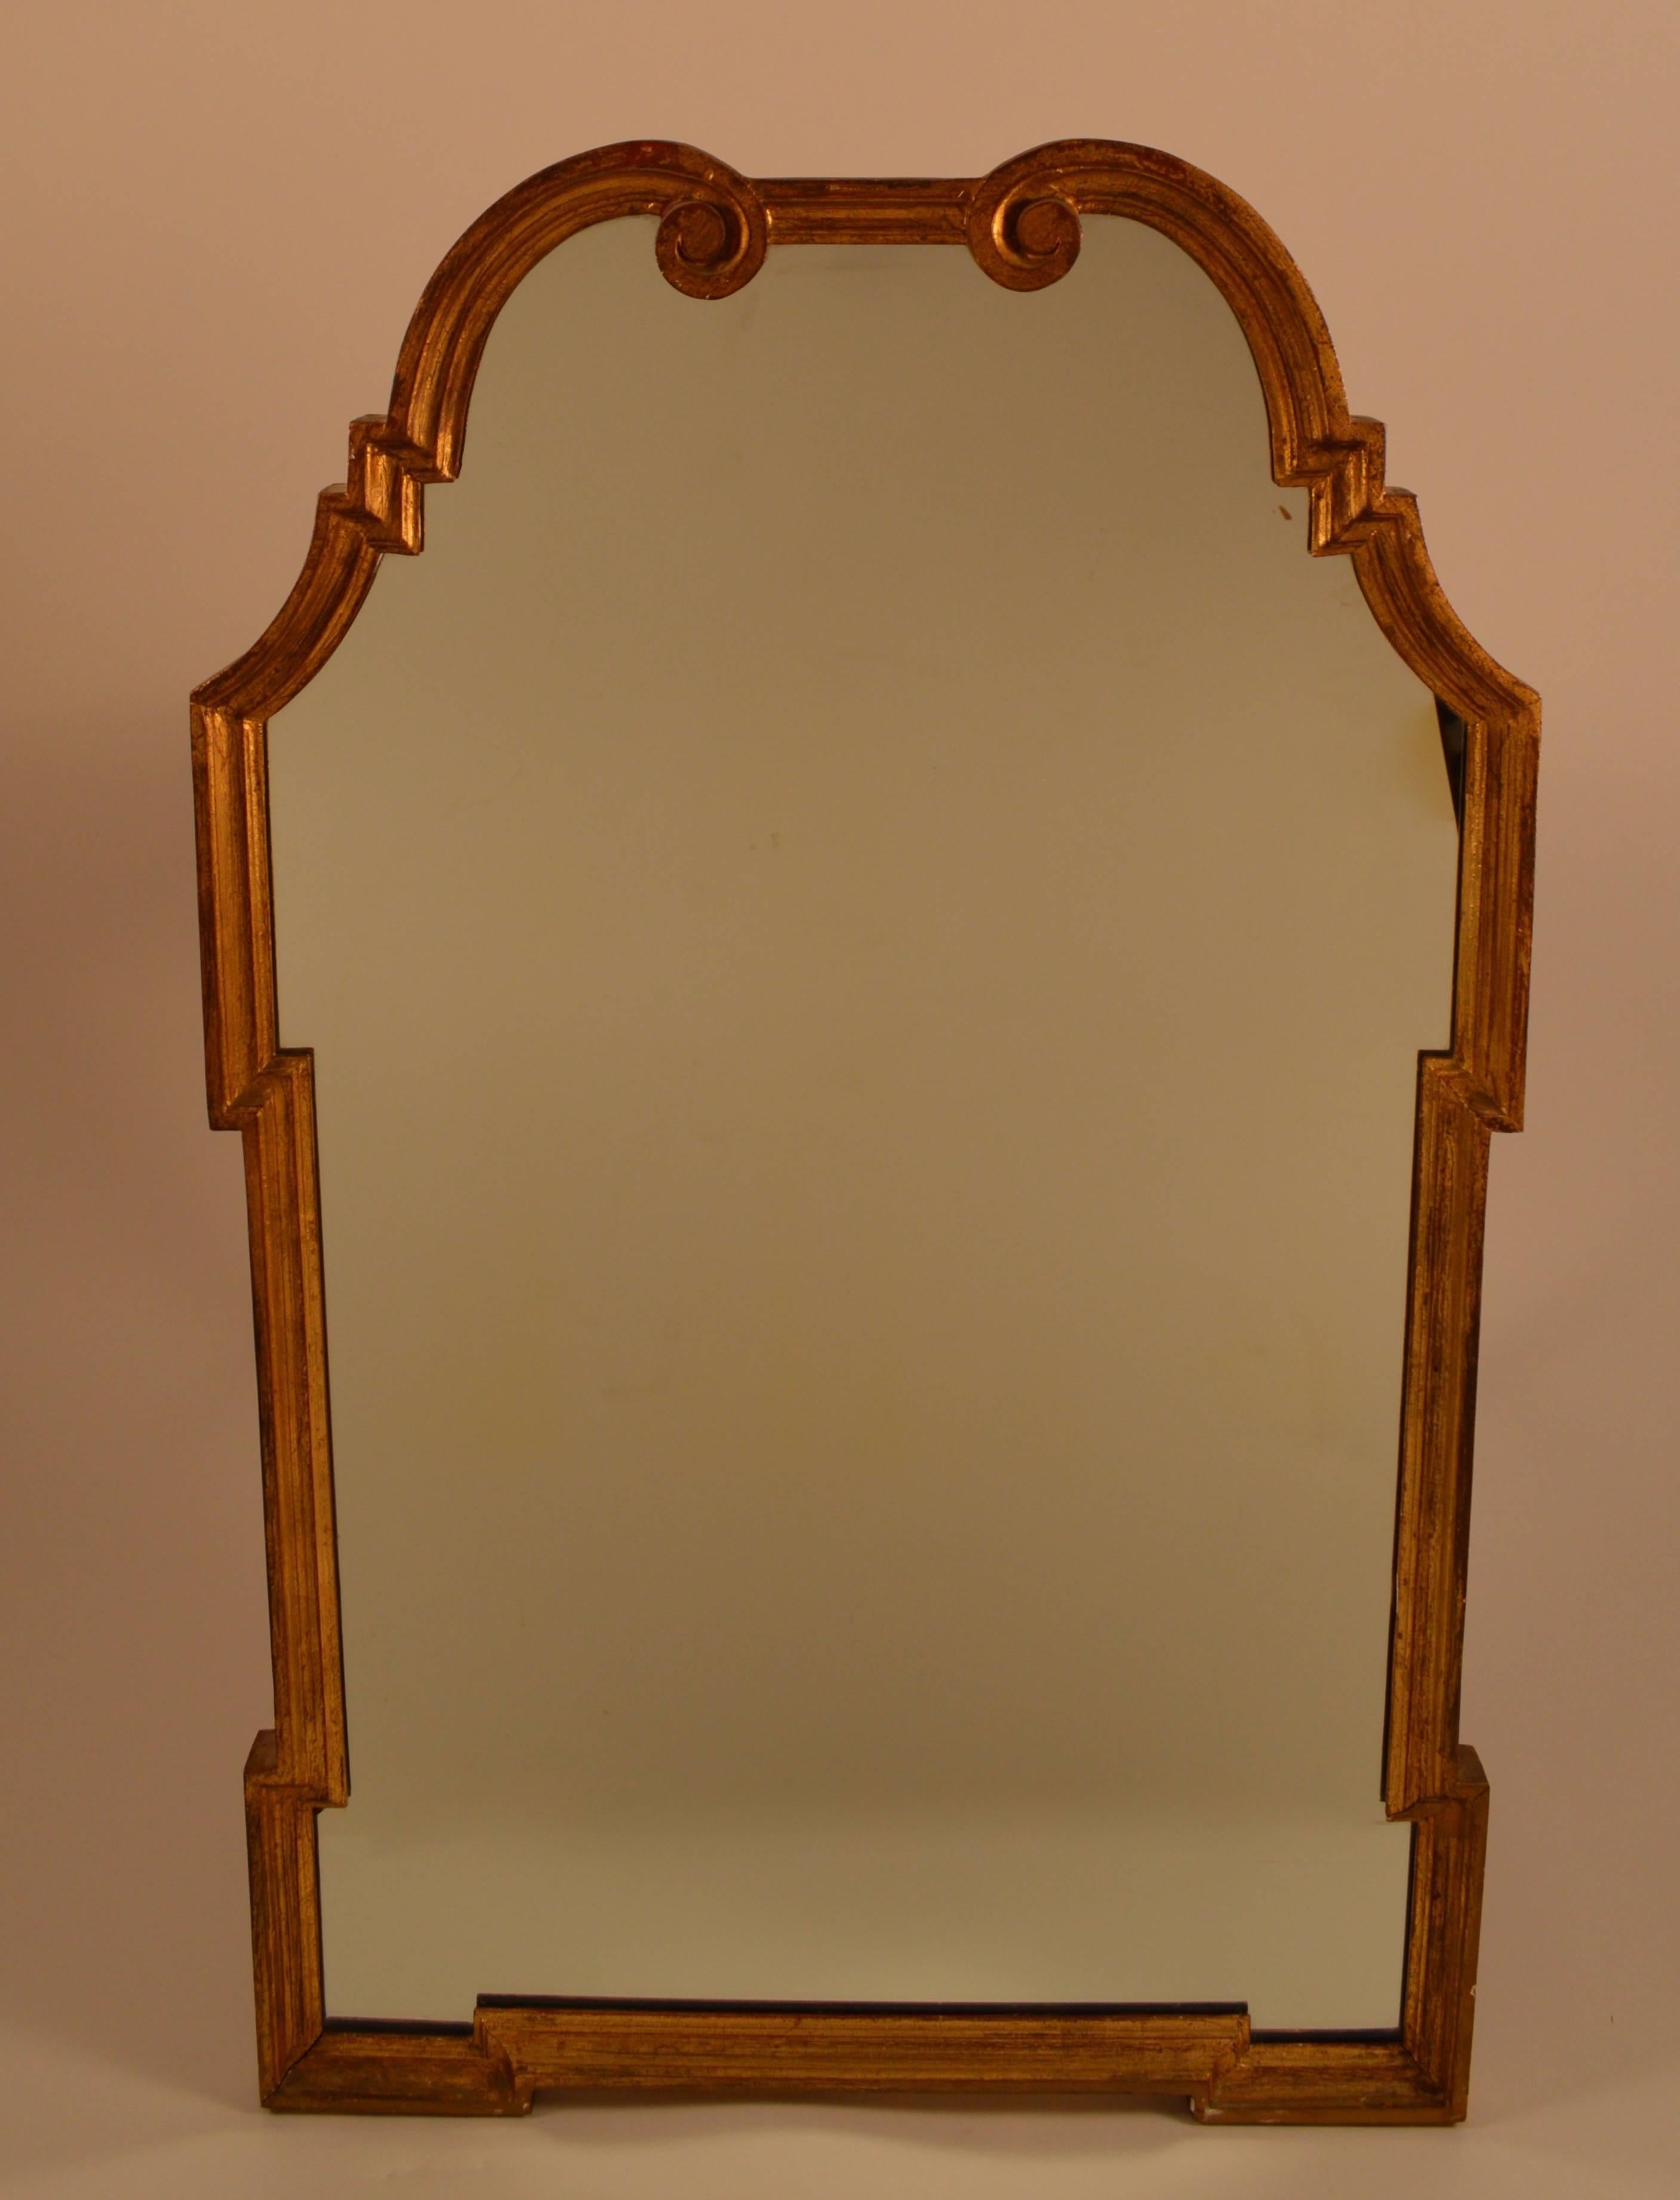 Stylish Labarge Queen Anne style gilt mirror in very fine original condition. Distressed finish gilt frame, bright clean mirror.